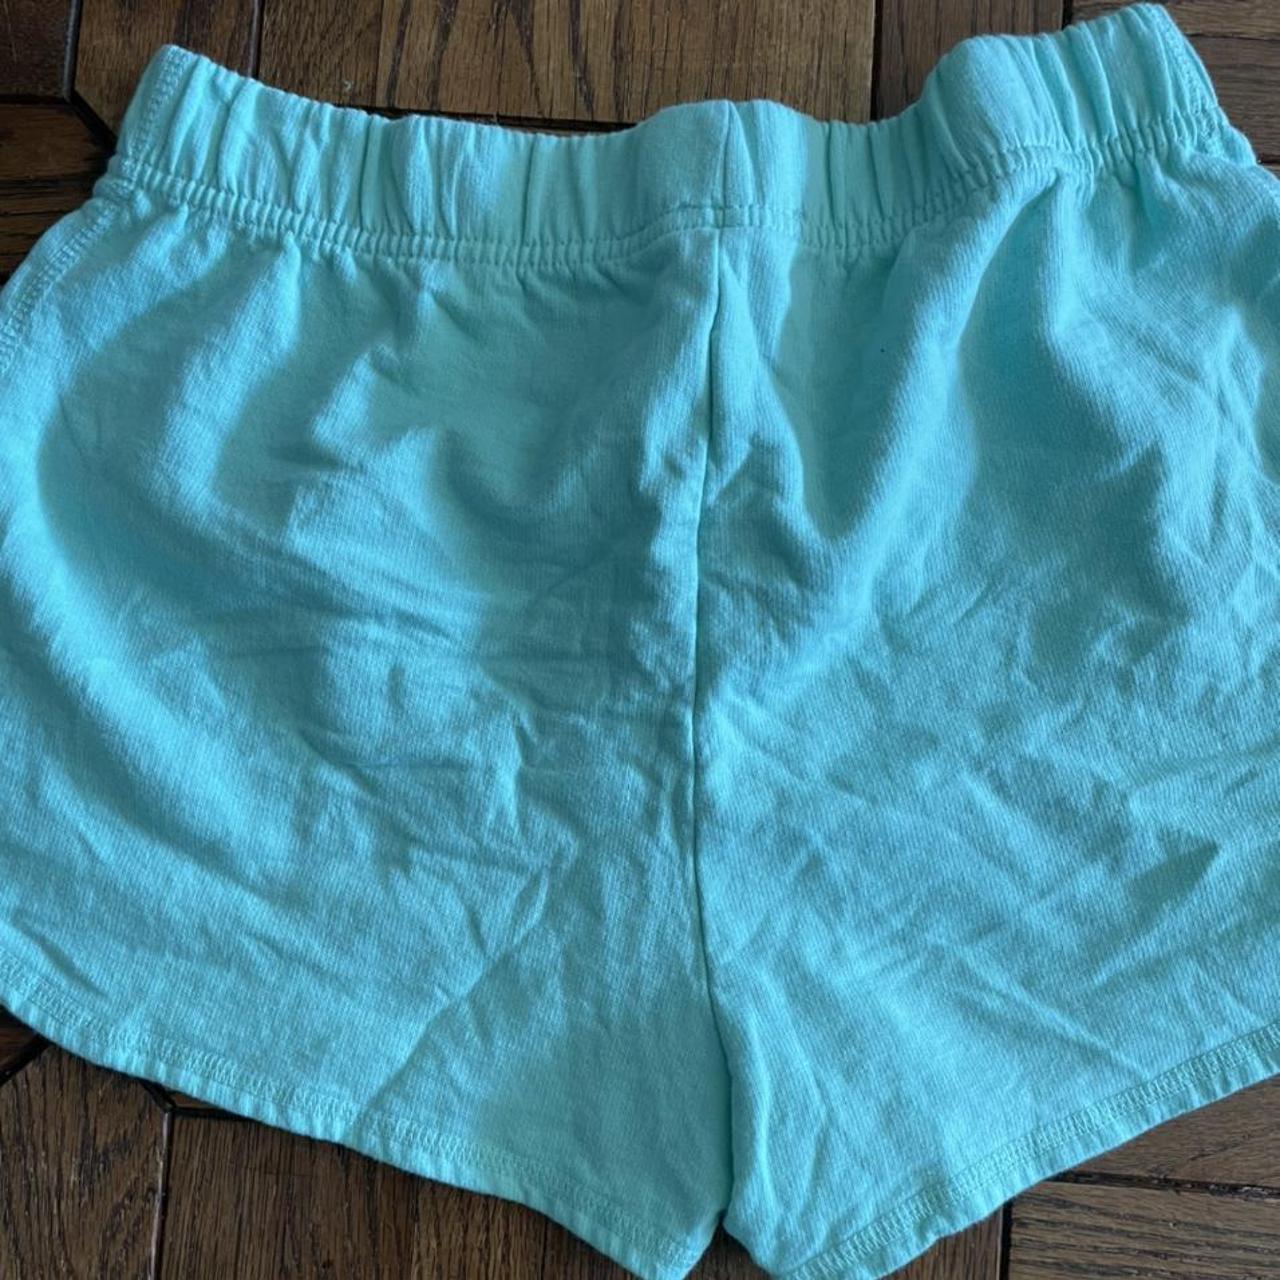 Mint green Primark shorts Lighter than in photo Size... - Depop